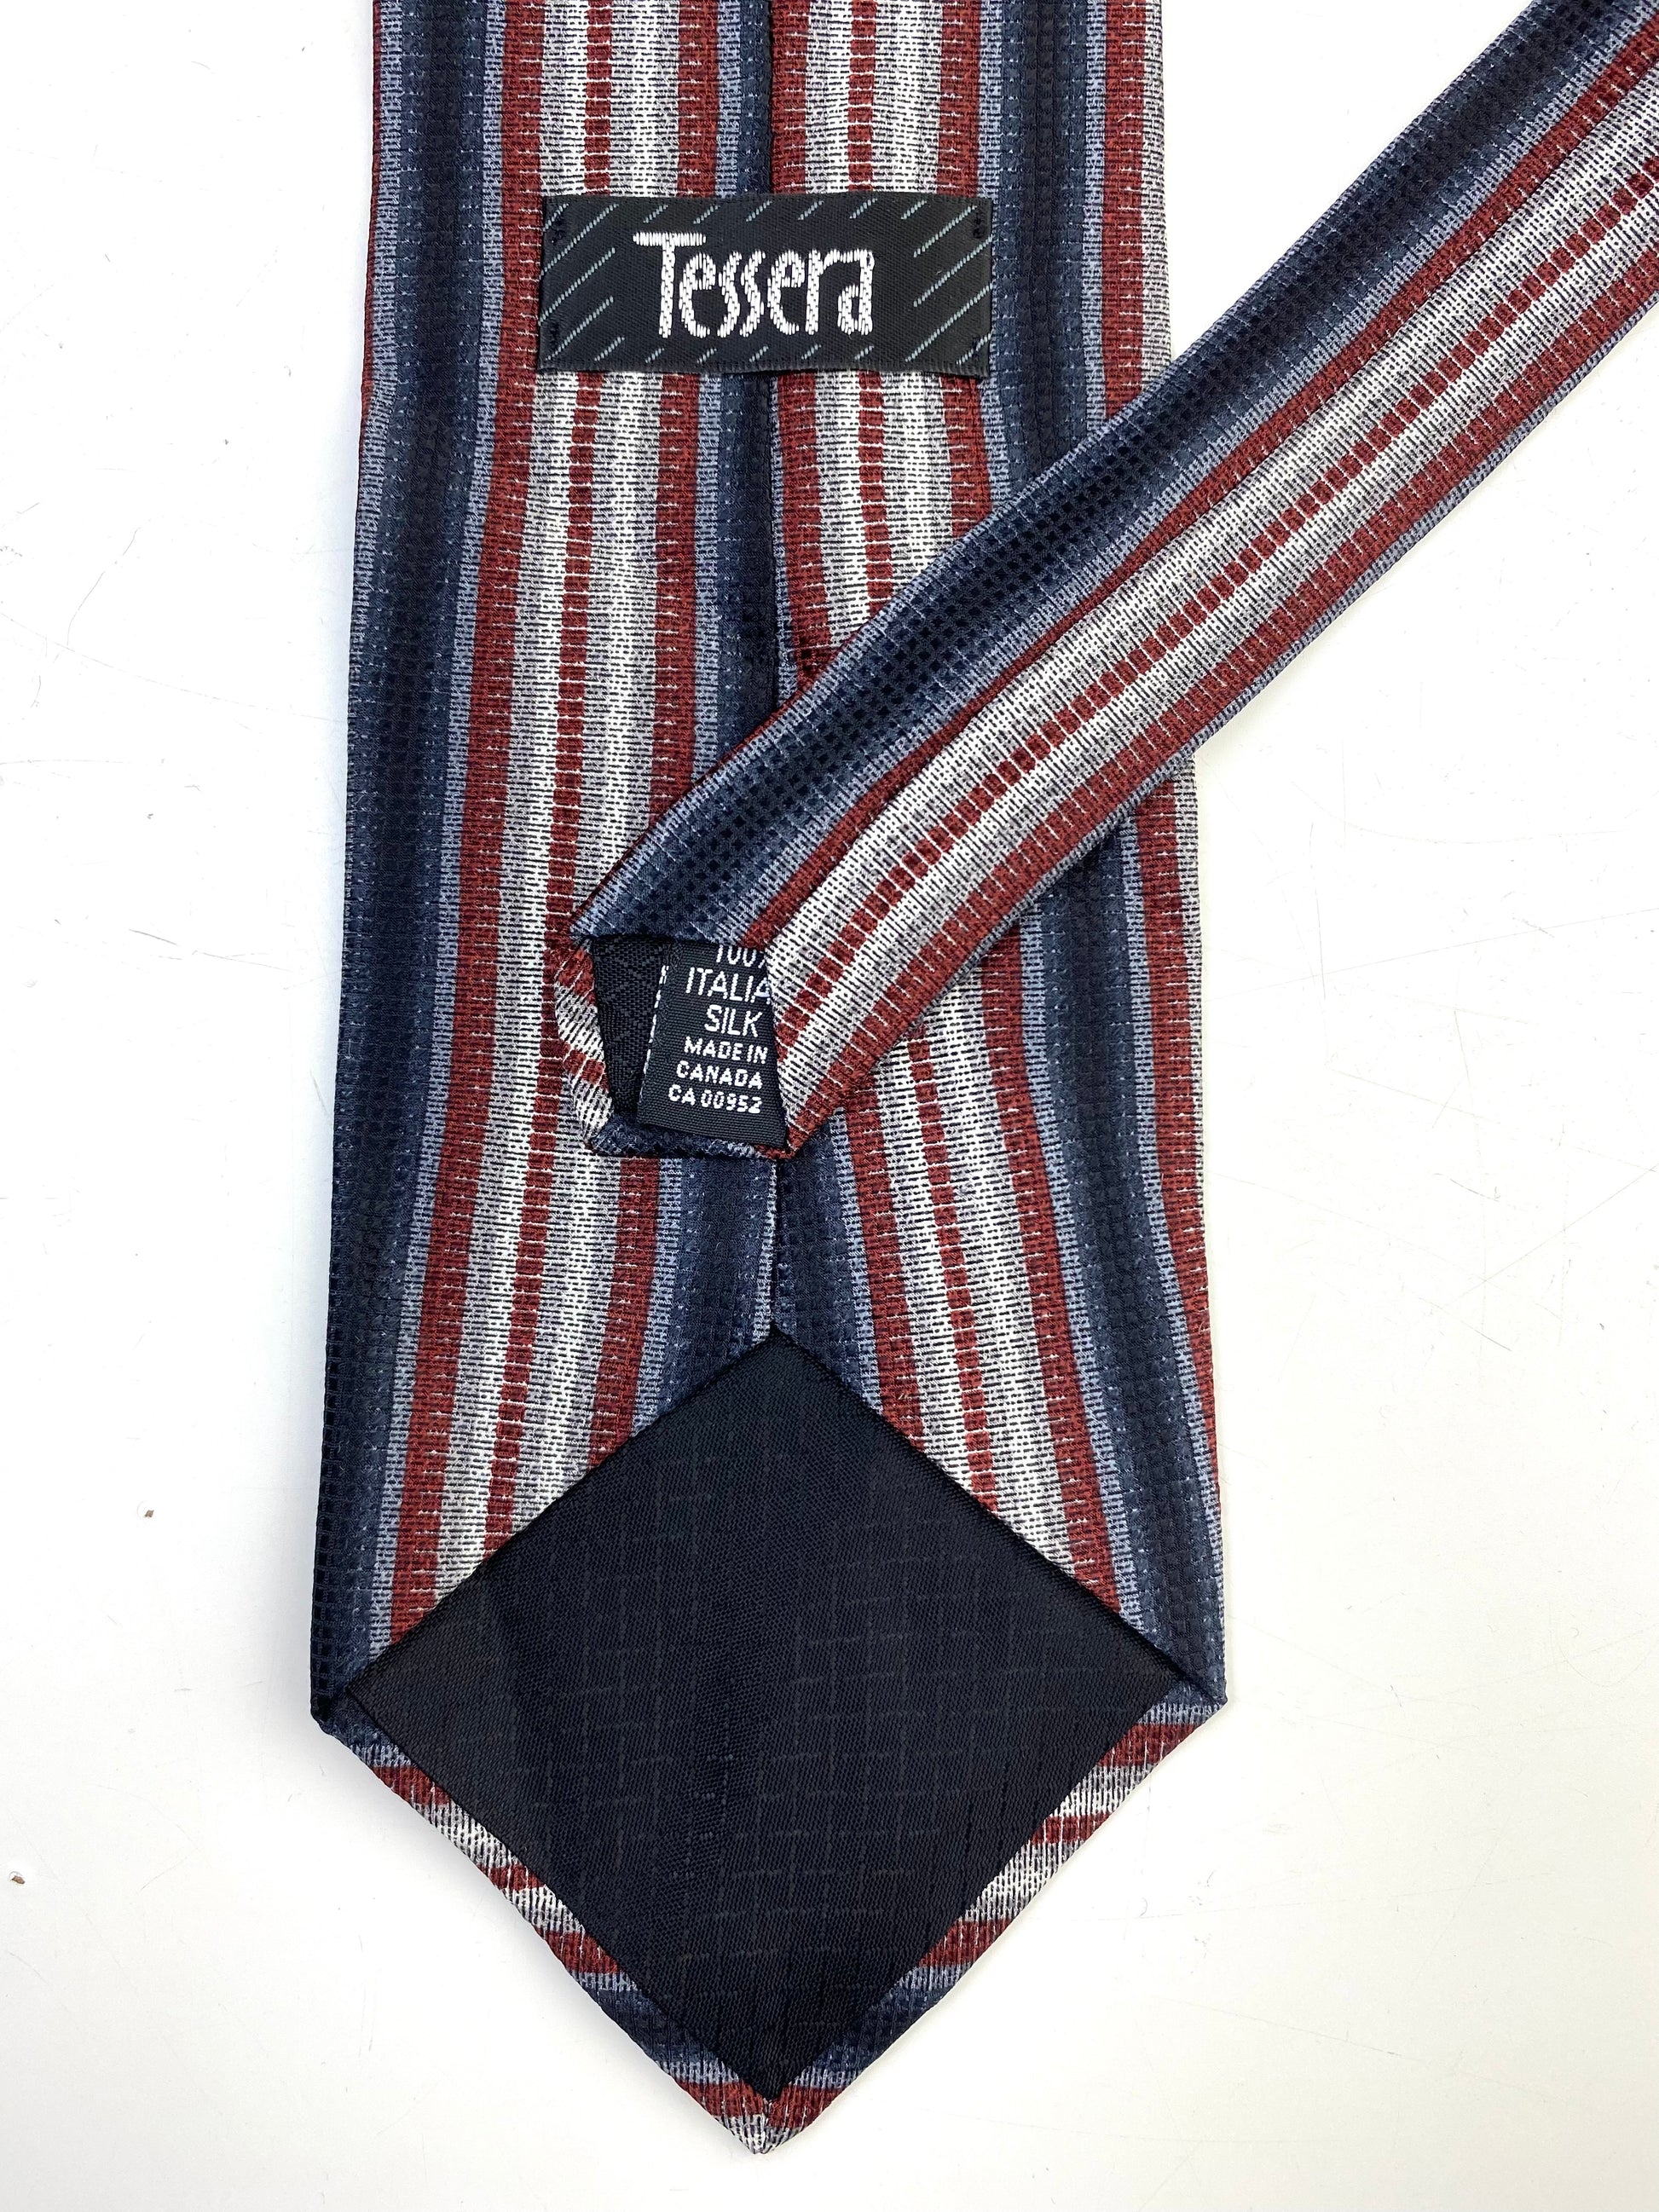 90s Deadstock Silk Necktie, Men's Vintage Wine/ Navy/ Grey Vertical Stripe Tie, NOS